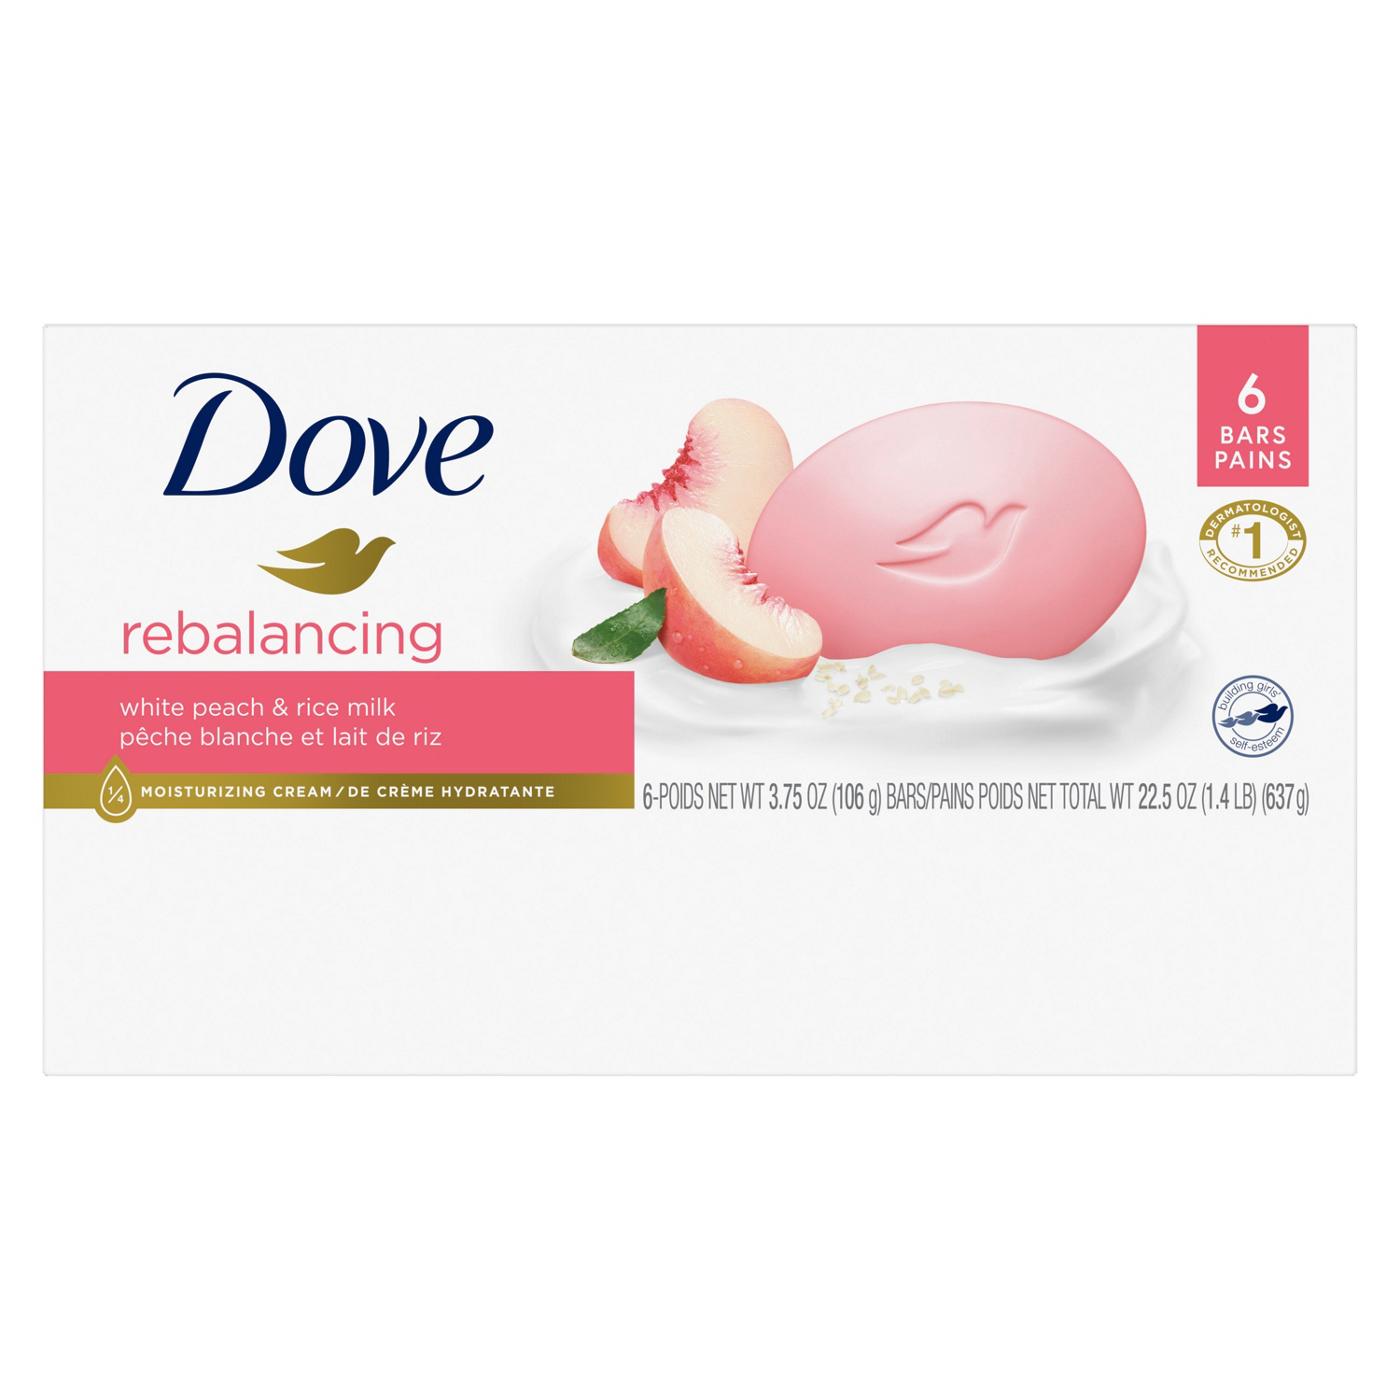 Dove Rebalancing Beauty Bar - White Peach & Rice Milk; image 4 of 4